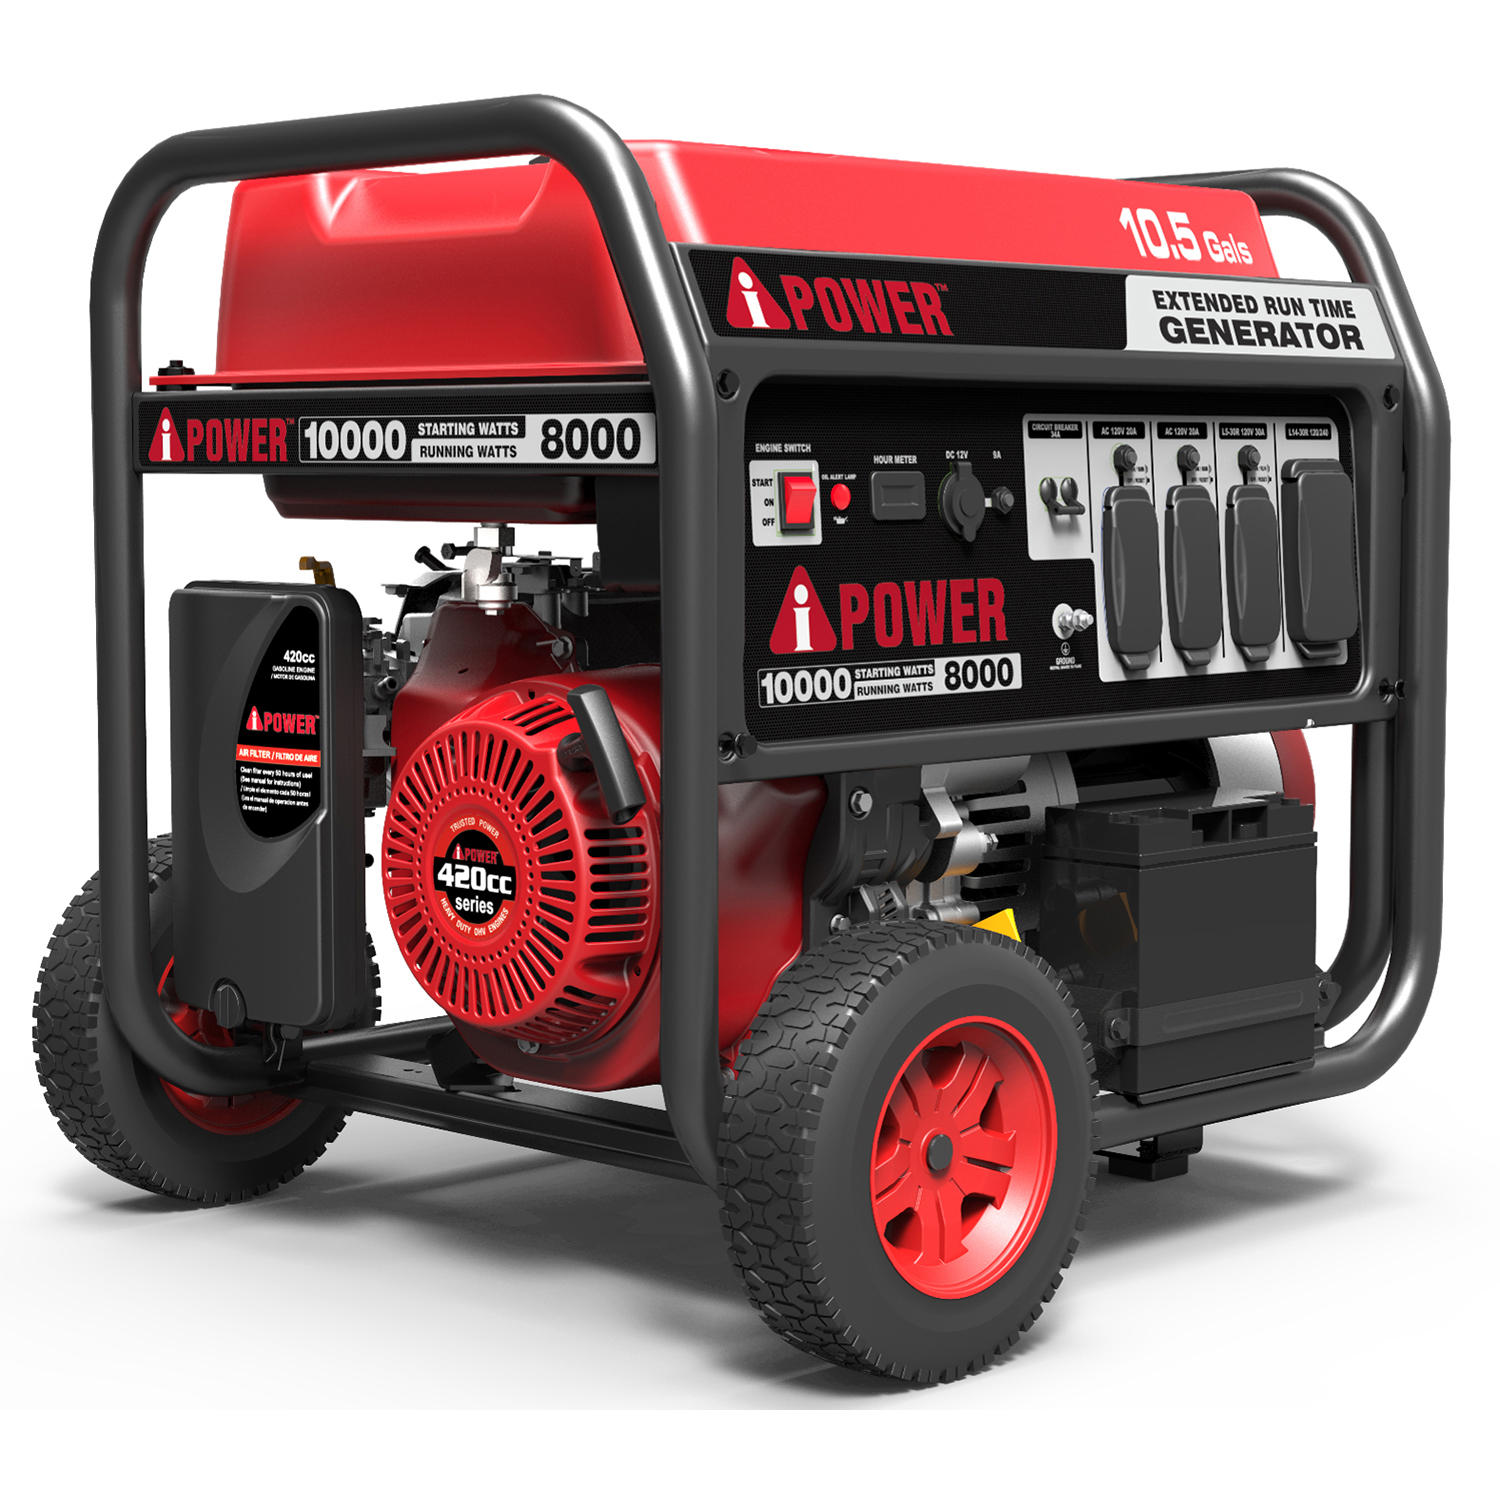 A-iPower Portable Generator with Electric Start, 10,000 Watt Starting Power & 8,000 Watt Running Power, Large Fuel Tank